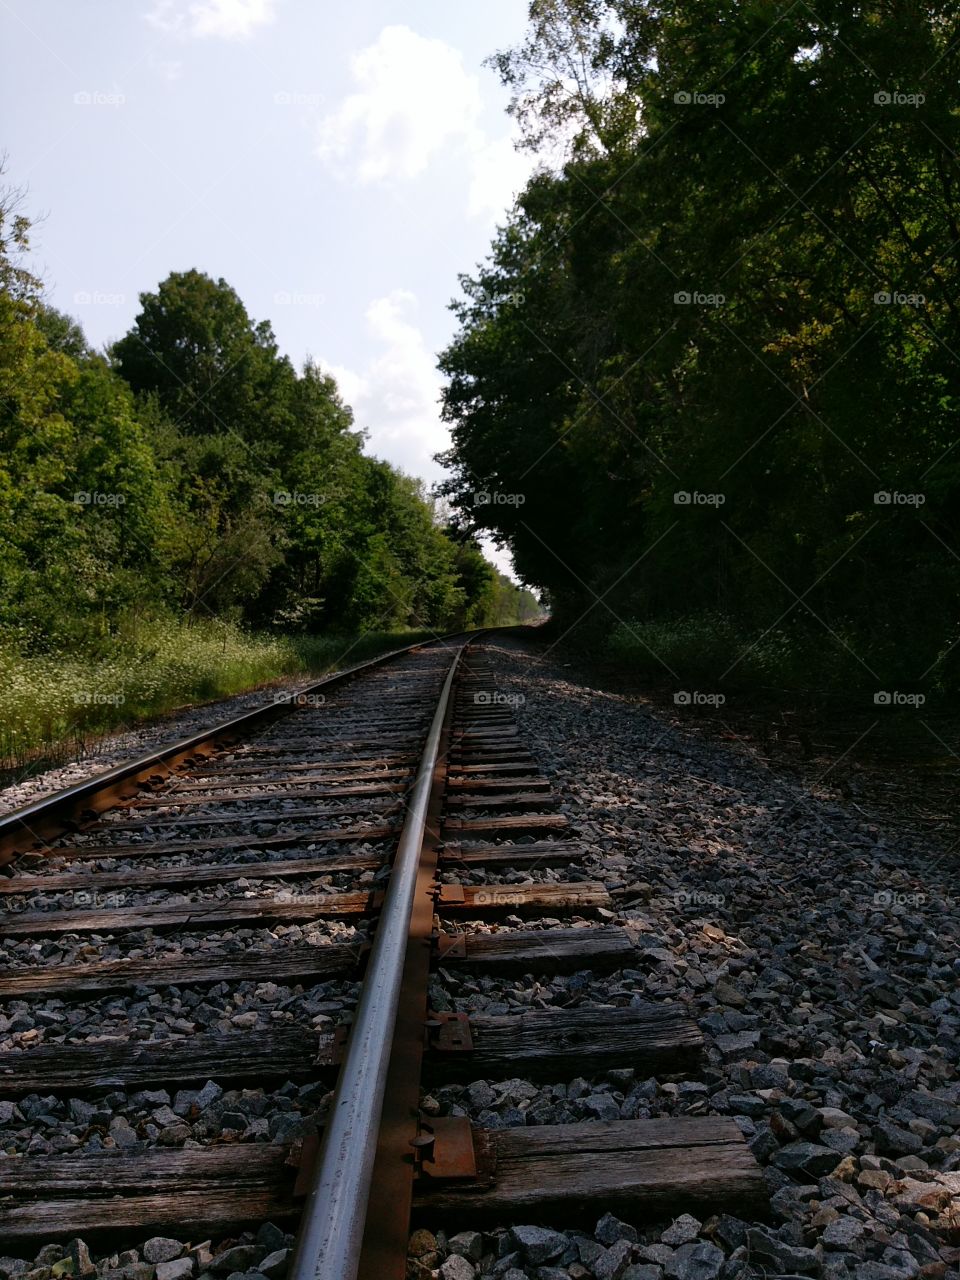 sitting on the tracks